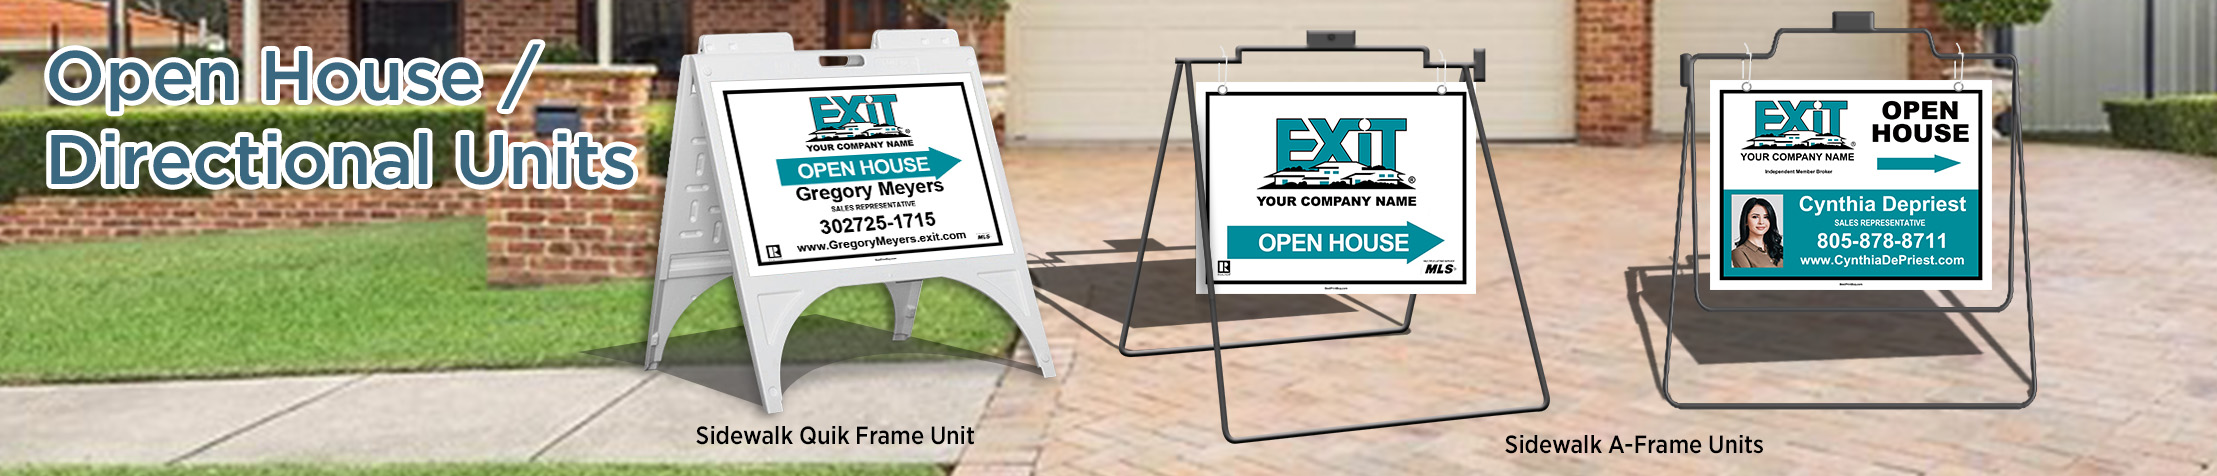 Exit Realty Real Estate Open House/Directional Units - real estate Sidewalk A-Frame signs | BestPrintBuy.com